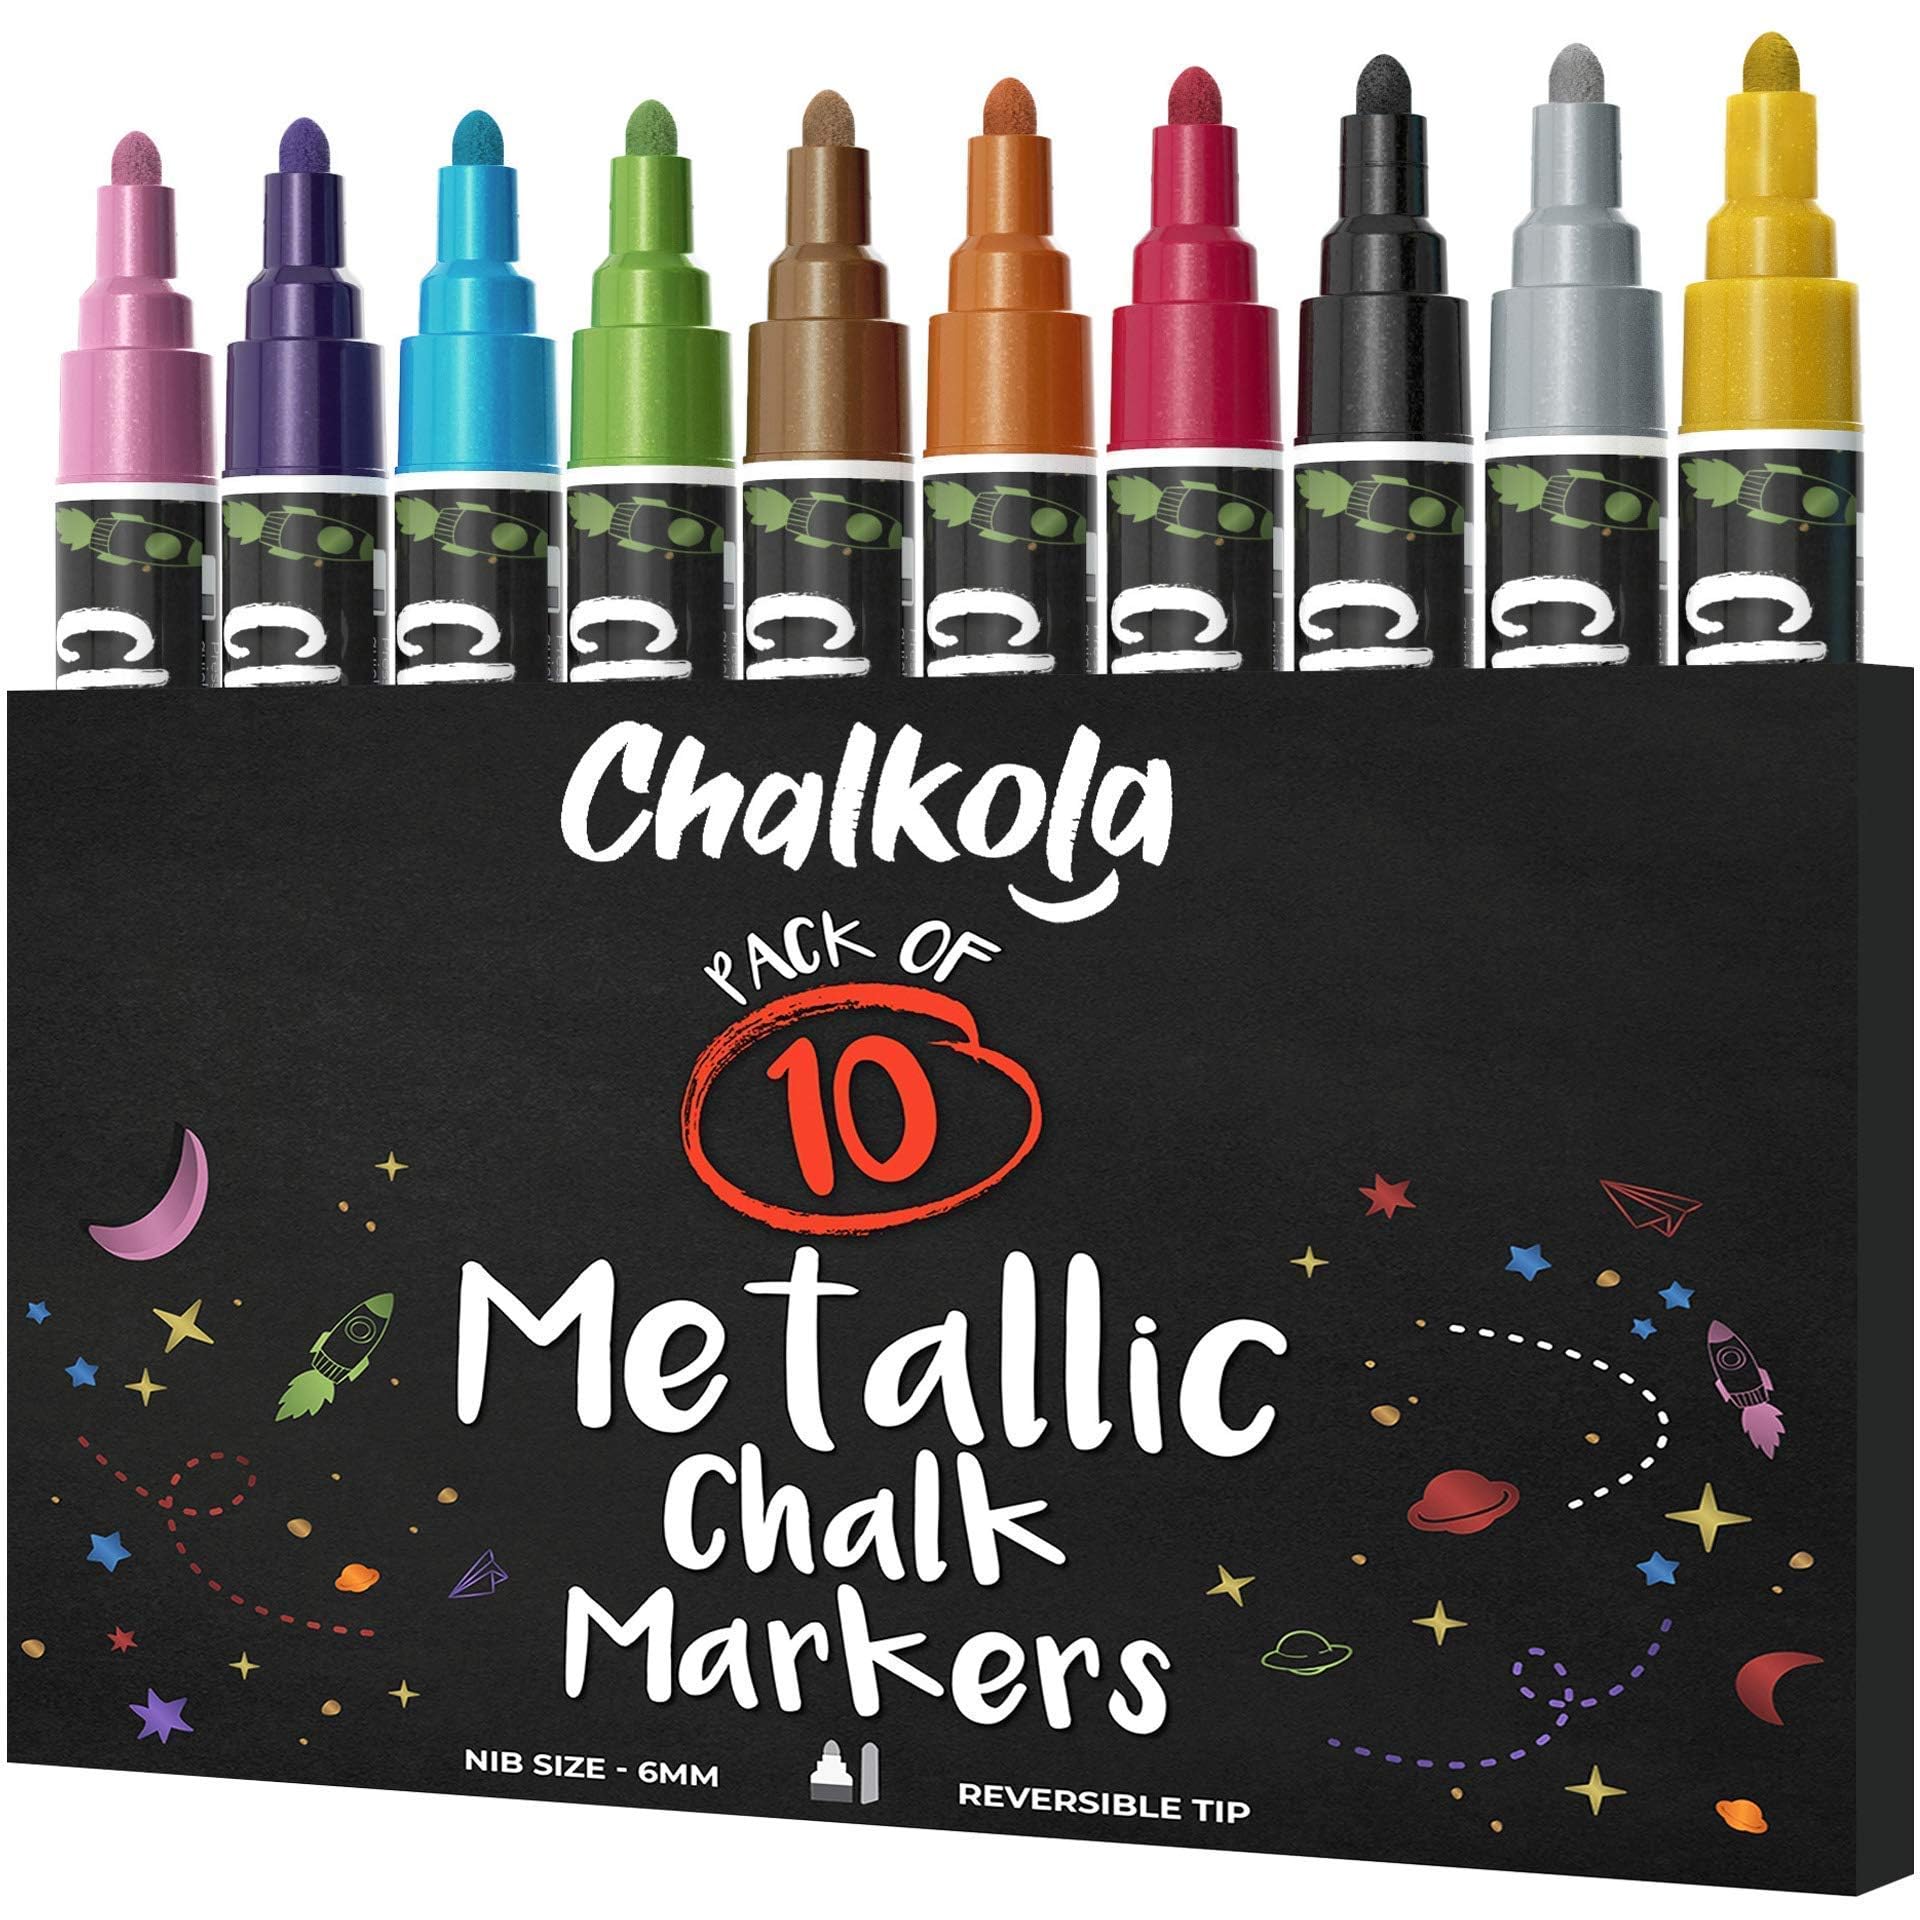 Metallic Chalk Markers (10 Pack) Liquid Chalk Pens - For Blackboards, Chalkboard, Bistro Menu, Window - Wet Wipe Erasable - 6mm Reversible Bullet & Chisel Tip